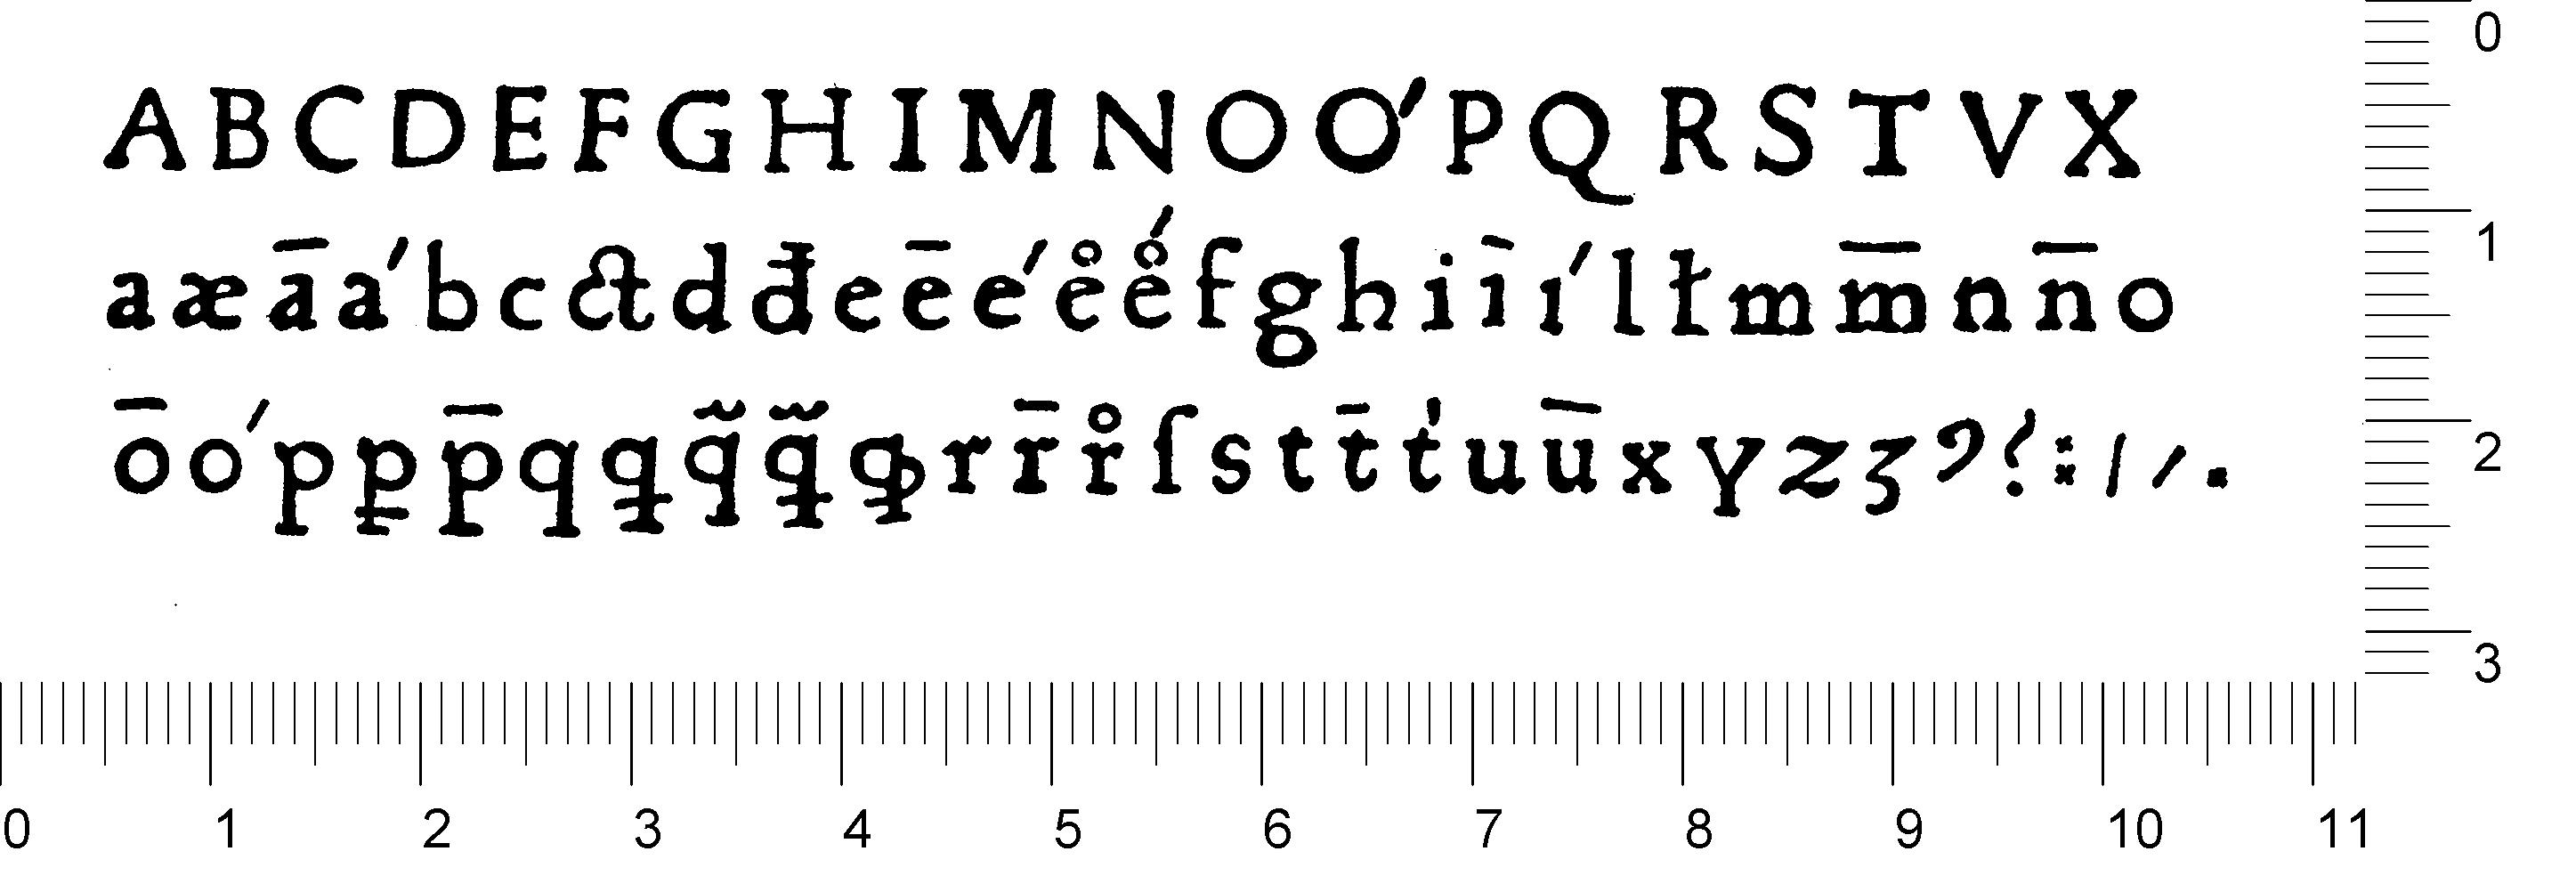 Abbildung der GfT-Tafeln vonGfT1916.1